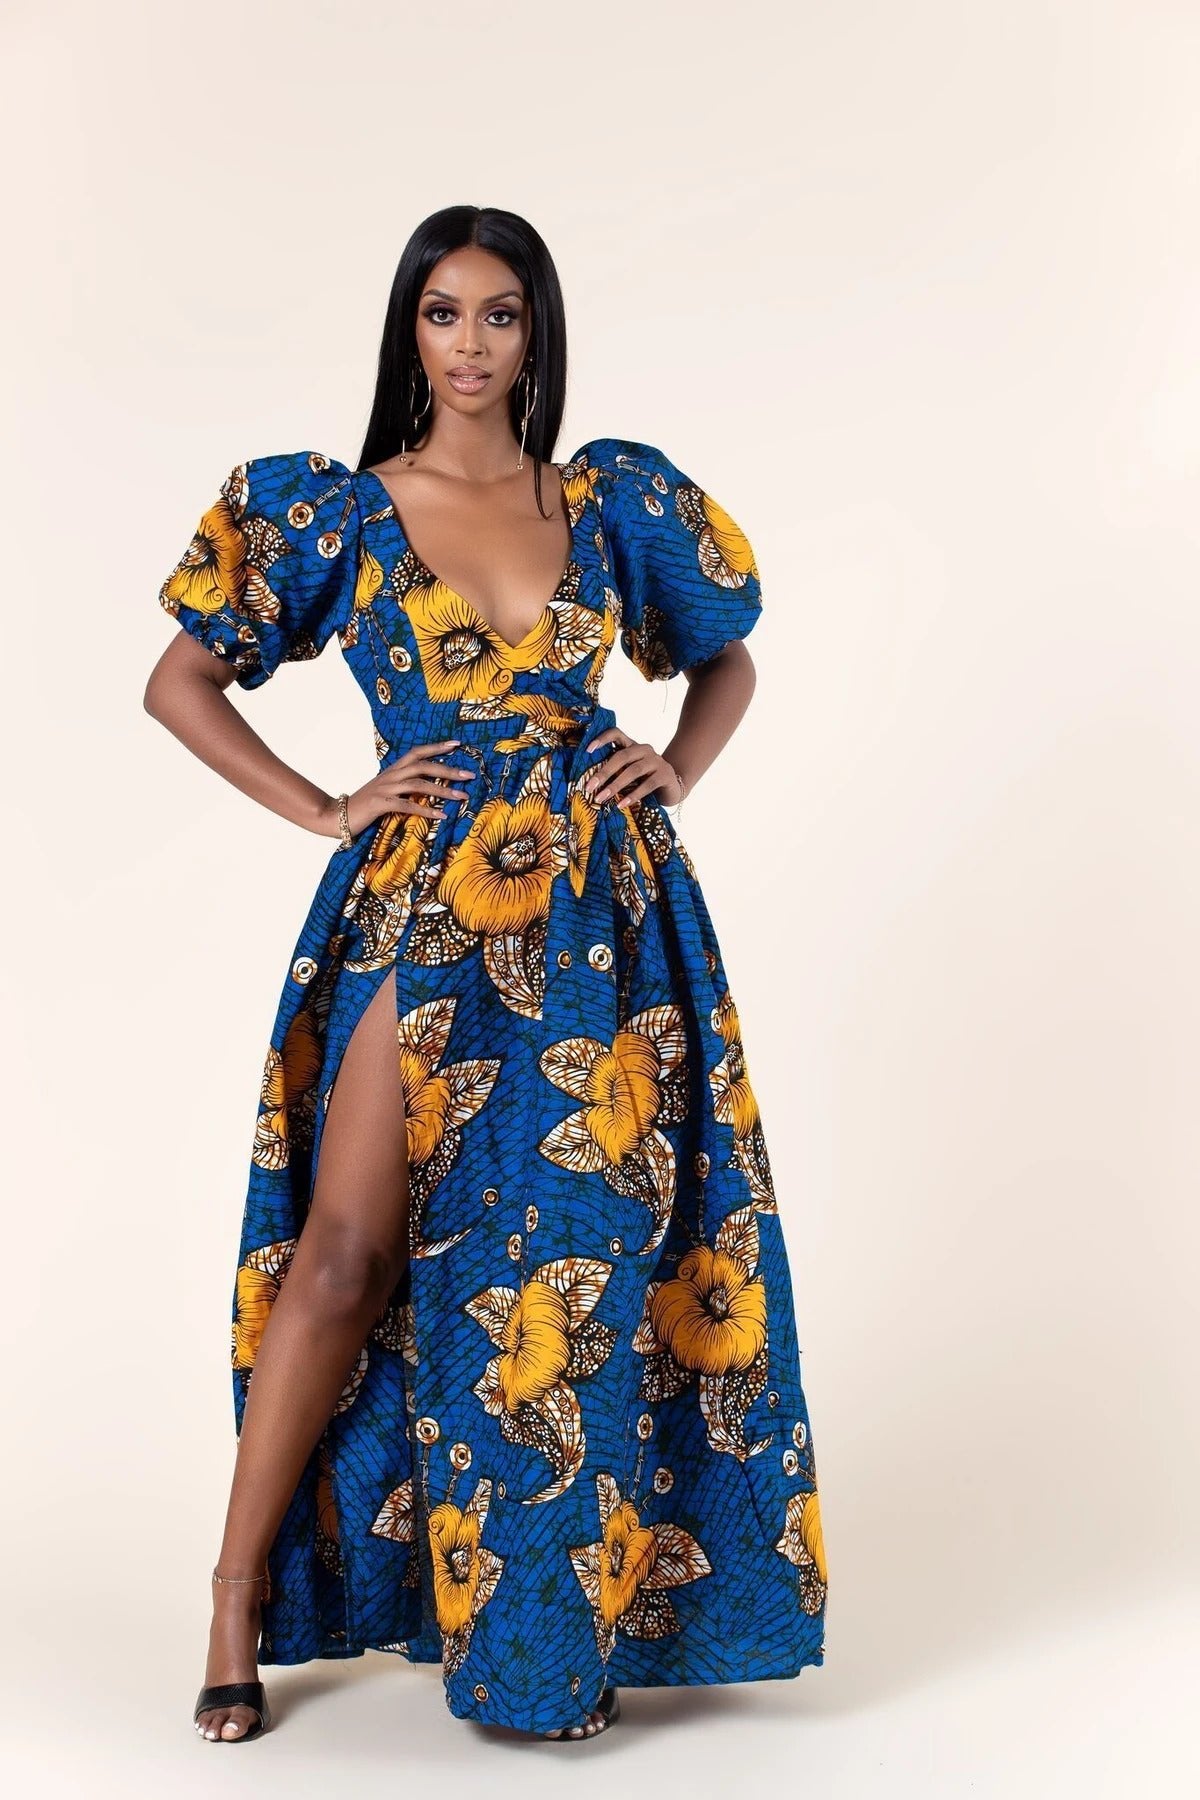 BLUE MUSTARD YELLOW AFRICAN ANKARA PRINT PLUS SIZE CLOTHING PARTY DRESS - Africanclothinghub UK, US, Canada